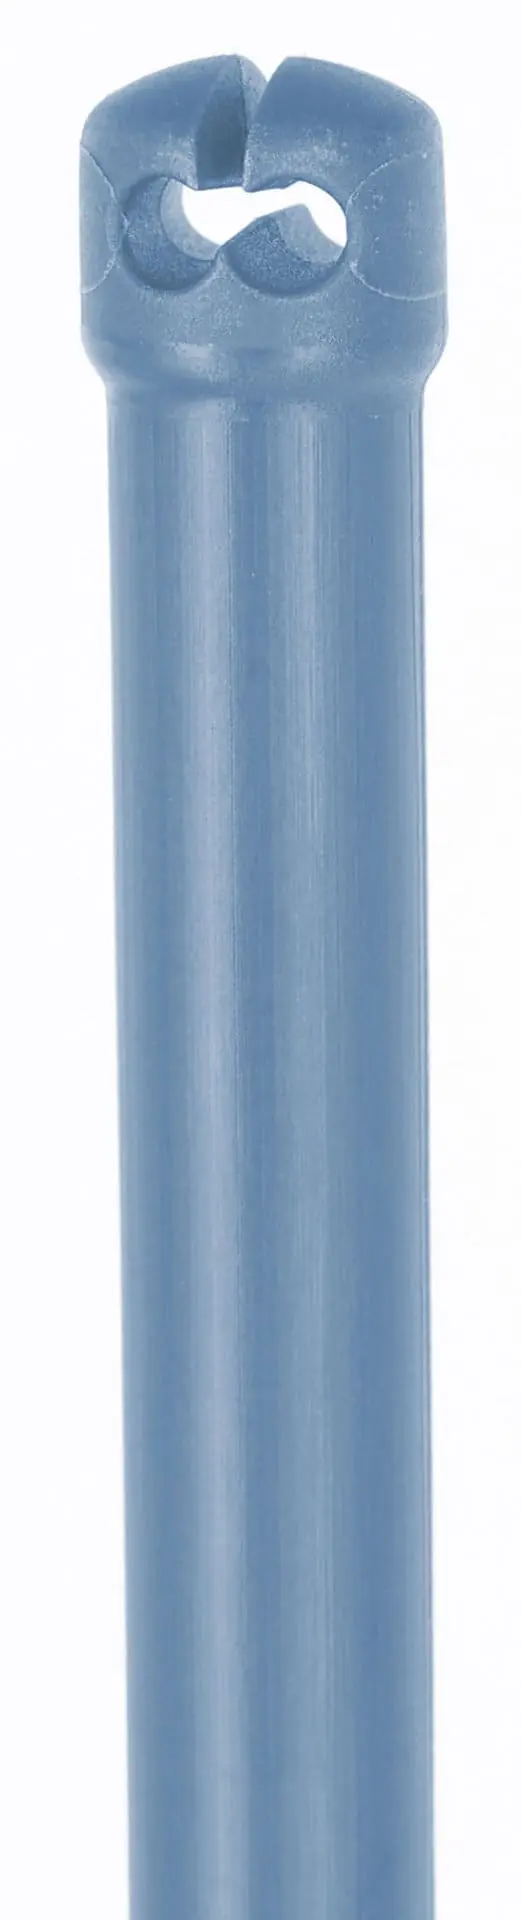 Schafnetz TitanNet Premium 50m x 108 cm orange/blau Doppelspitze